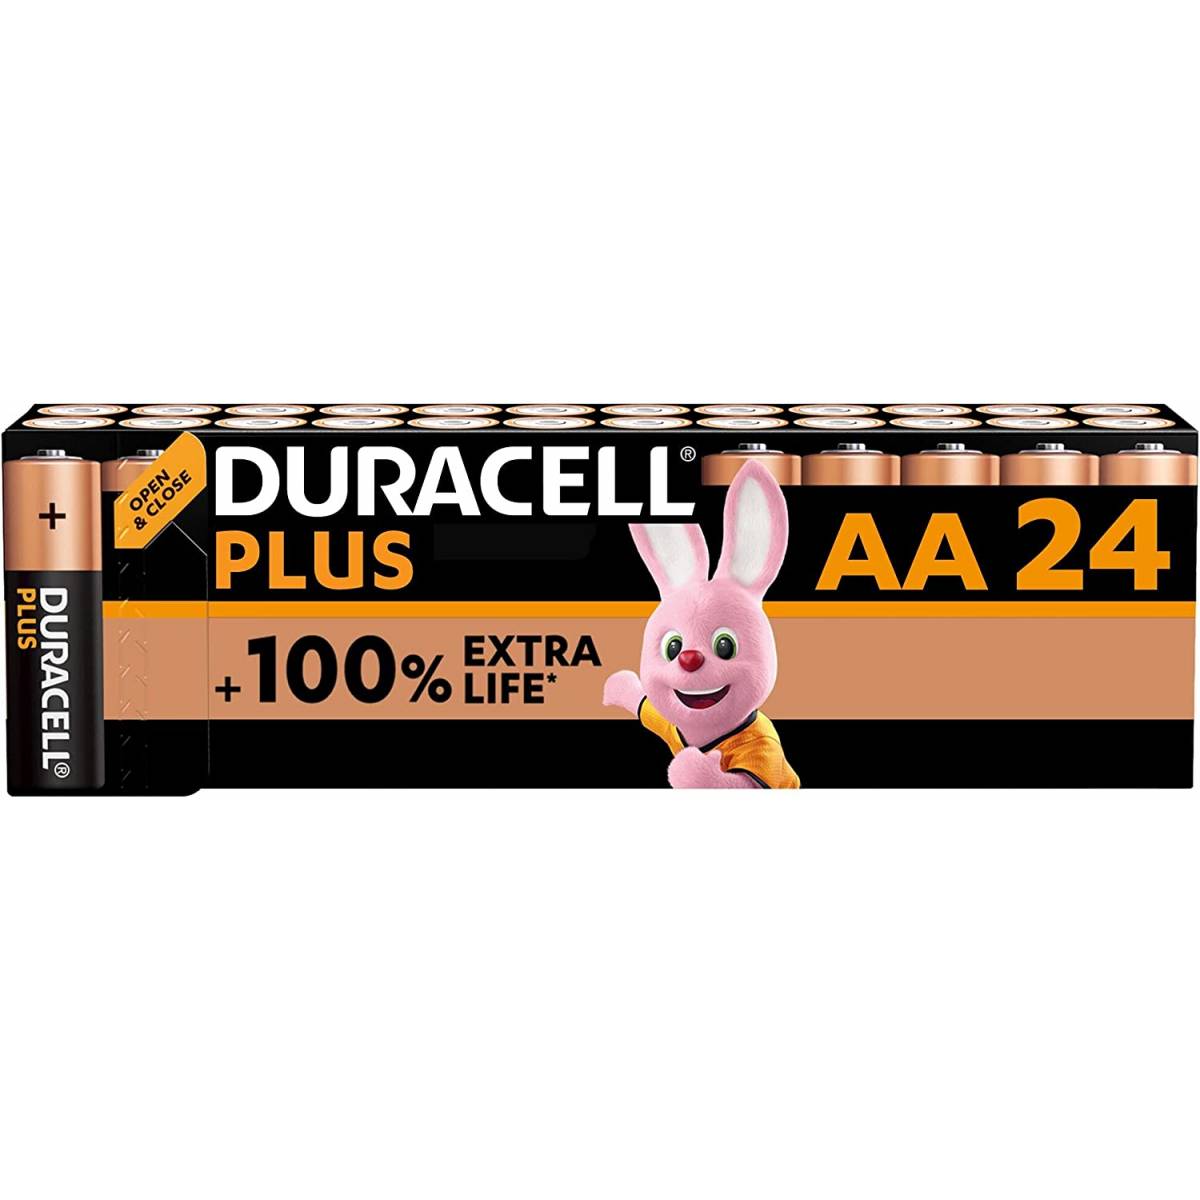 Duracell NEW Plus AA Alkaline Batteries Pack of 4 1.5V LR06 - MaxxiDiscount